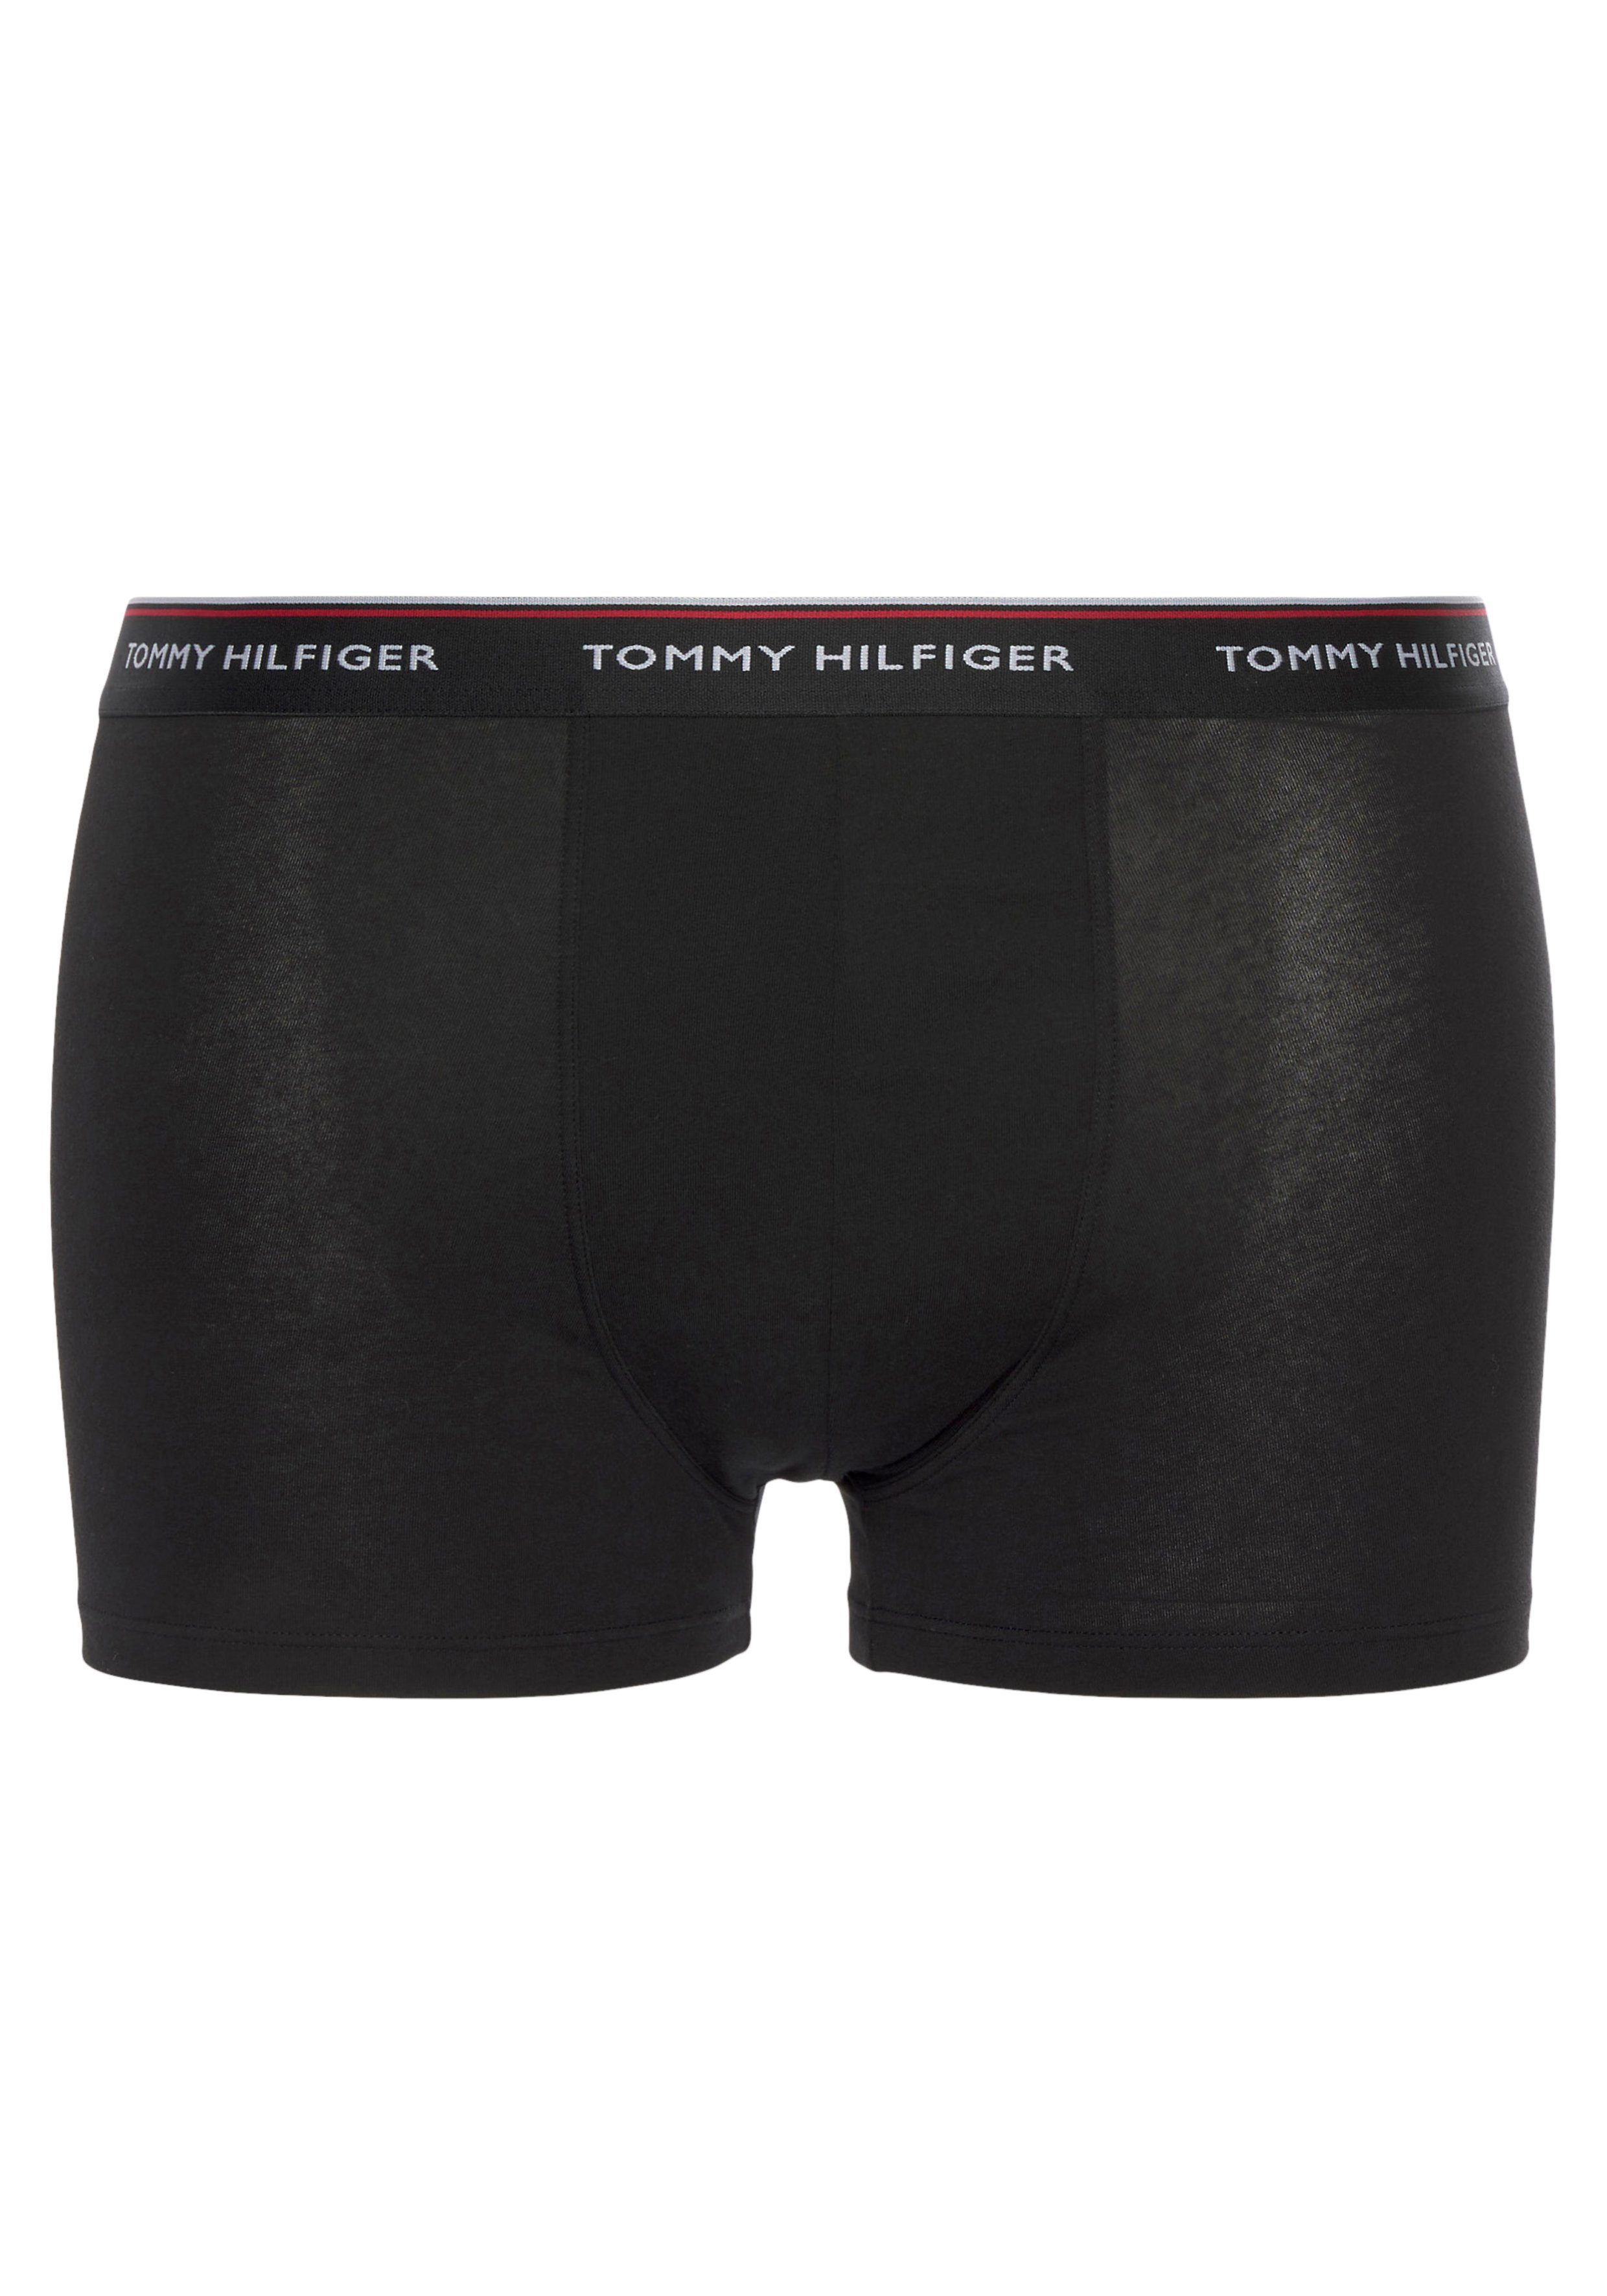 PACK Tommy Logo-Elastiktape mit TRUNK Hilfiger 3-St., Underwear 3 BT Trunk Black 3er-Pack) (Packung, Hilfiger Tommy